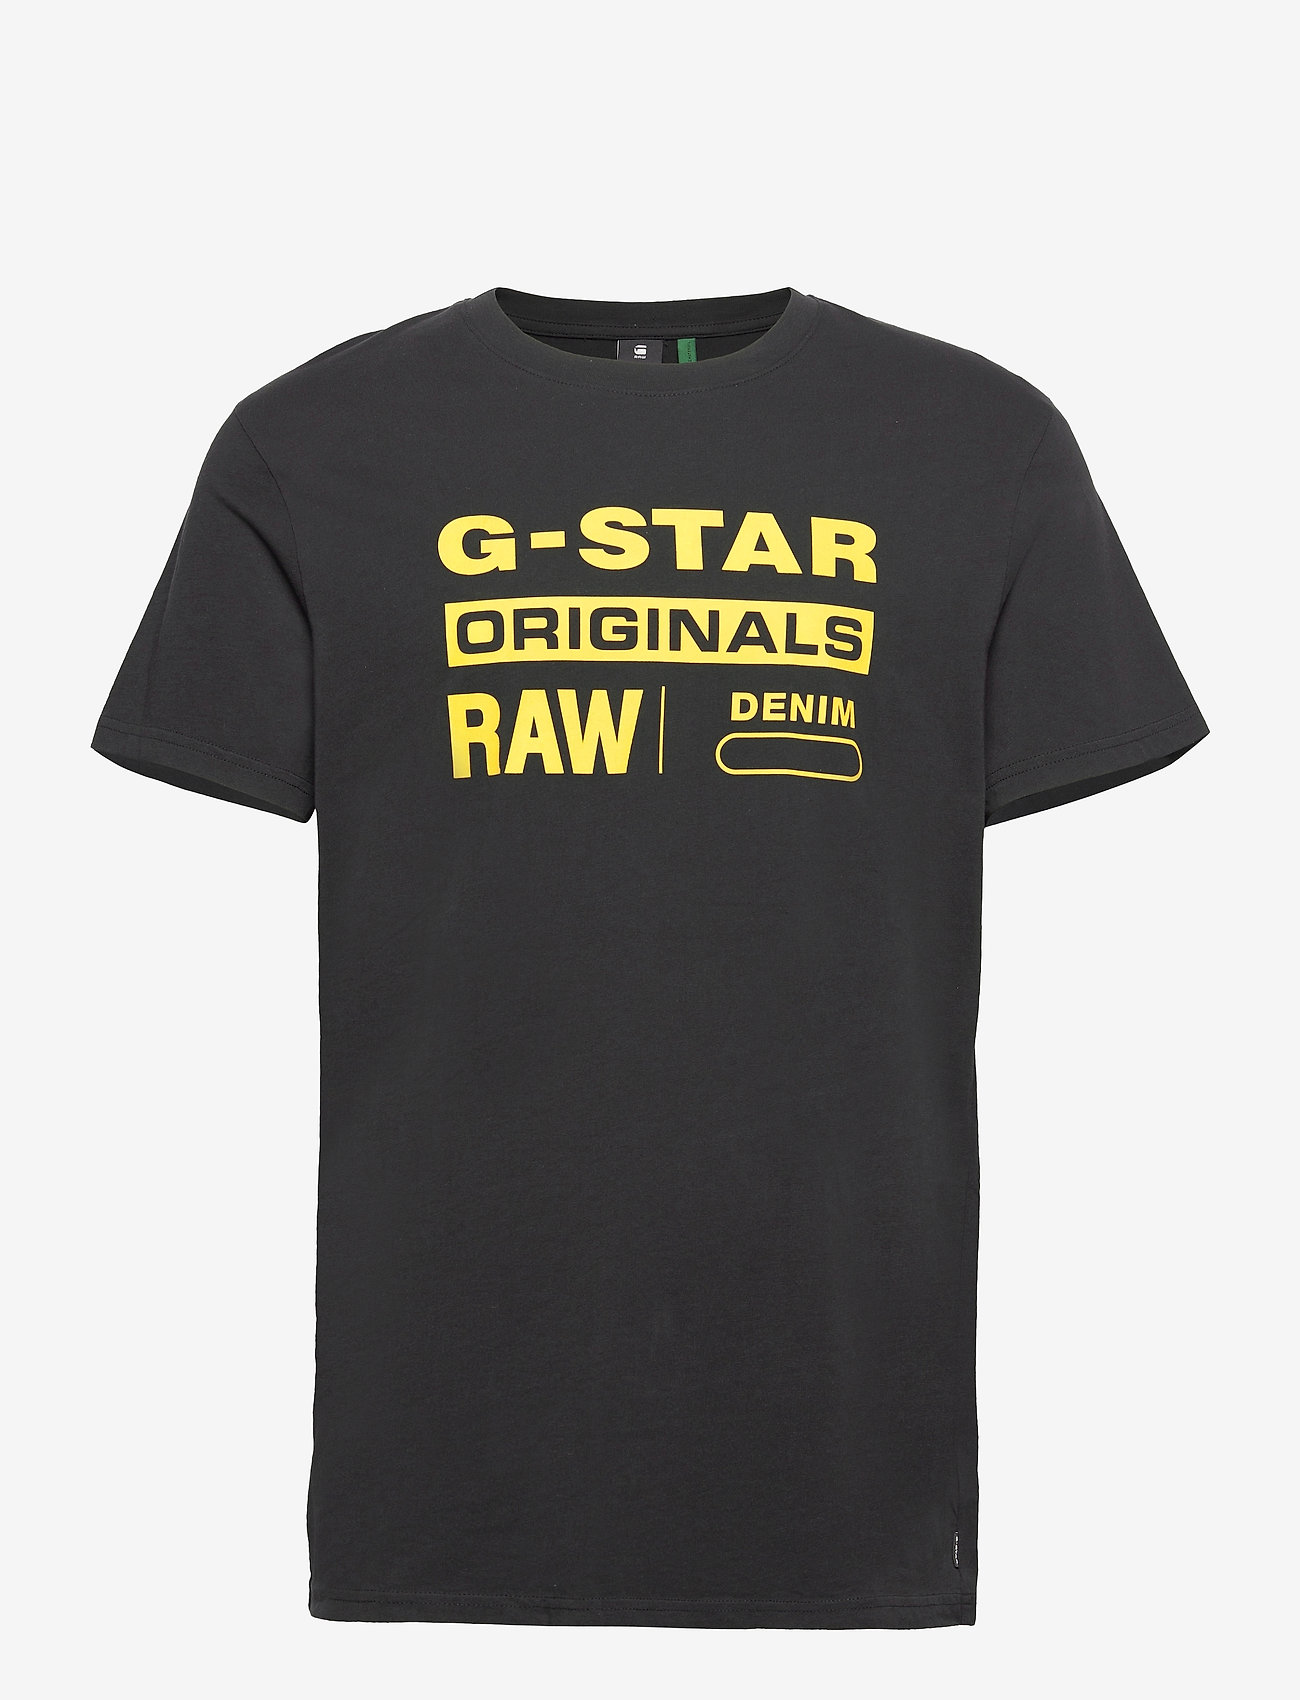 G-Star RAW - Graphic 8 r t s\s - laagste prijzen - dk black - 0